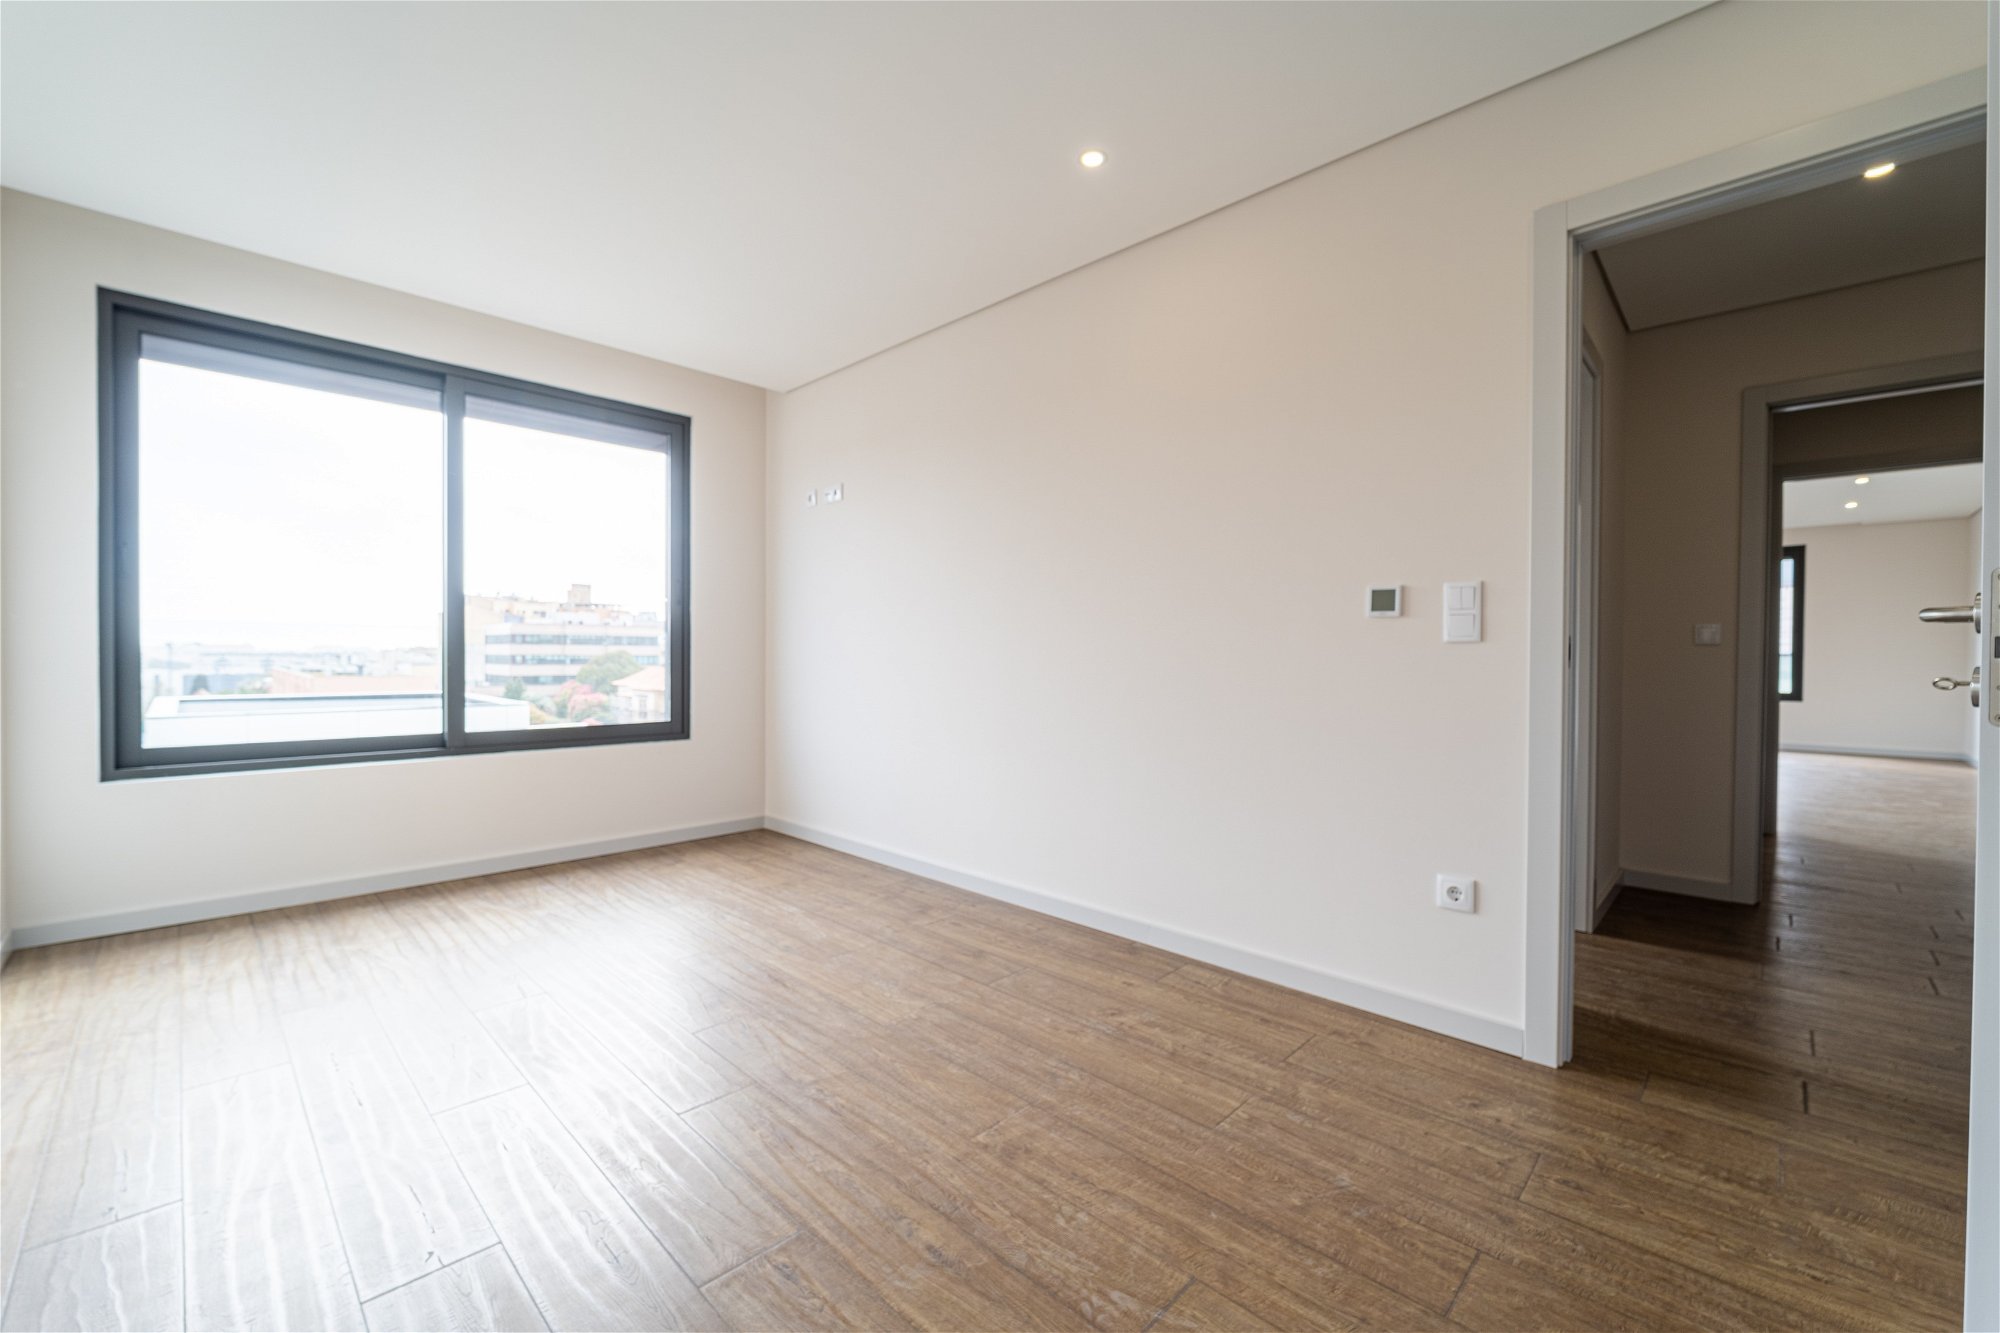 3 bedrooms apartment with balcony in Boavista, Porto 559920171